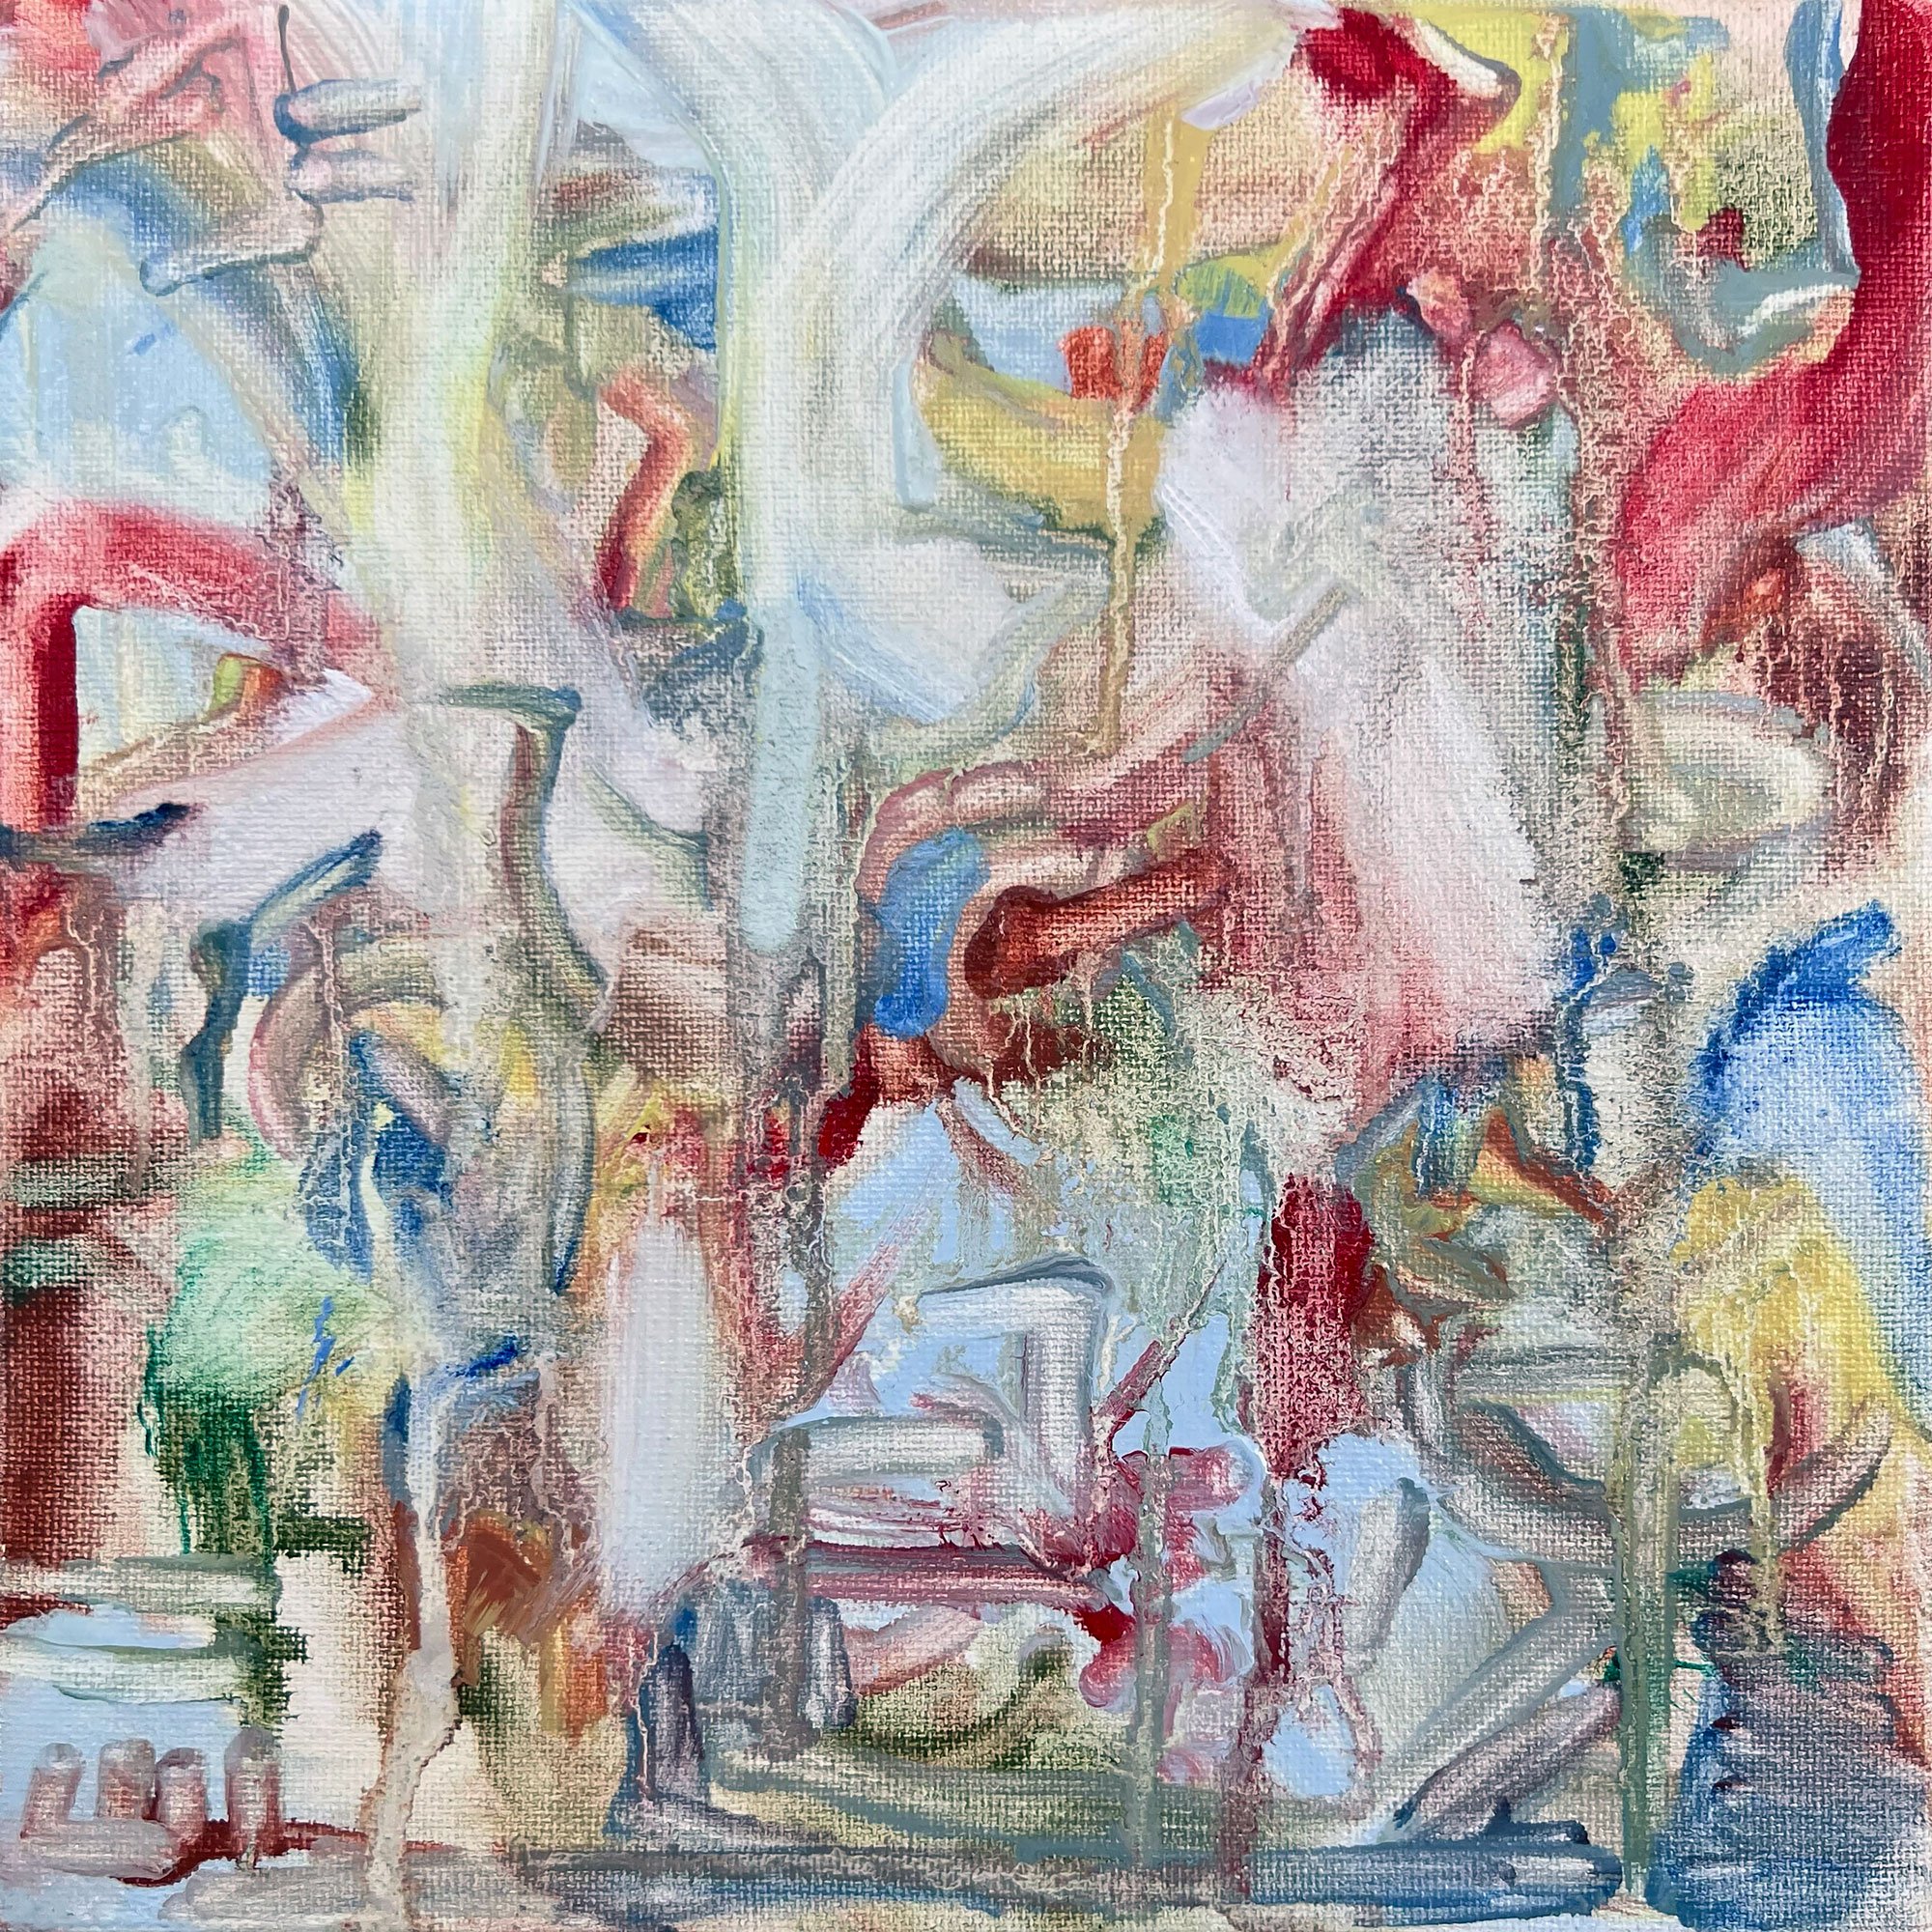 8"x8" Oil on canvas 